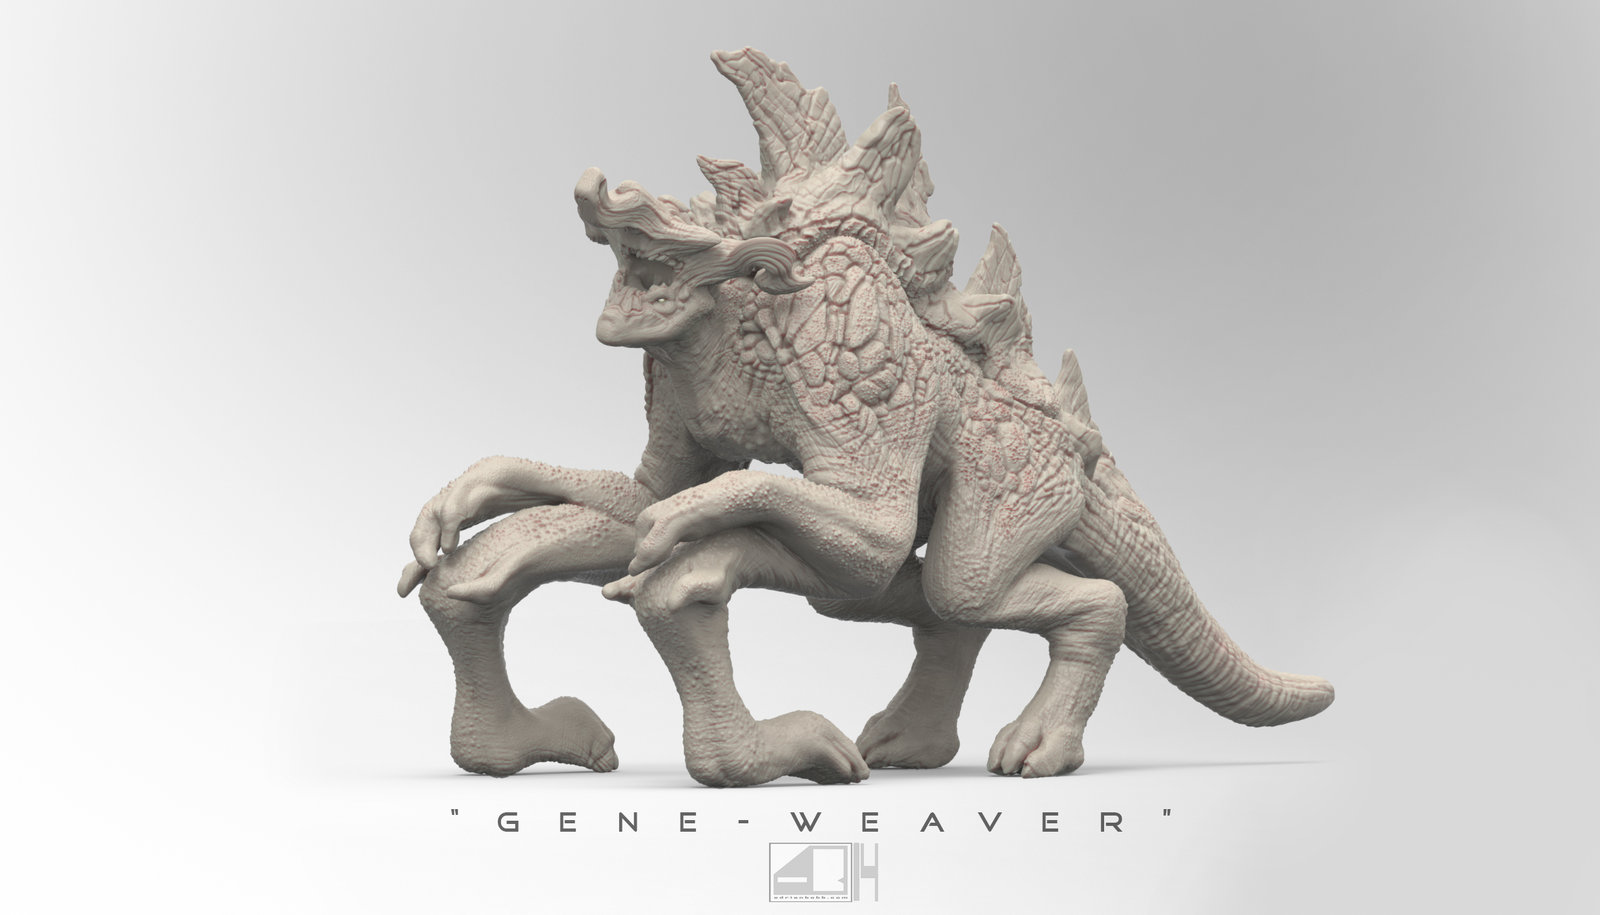 "Gene-Weaver Sculpt"